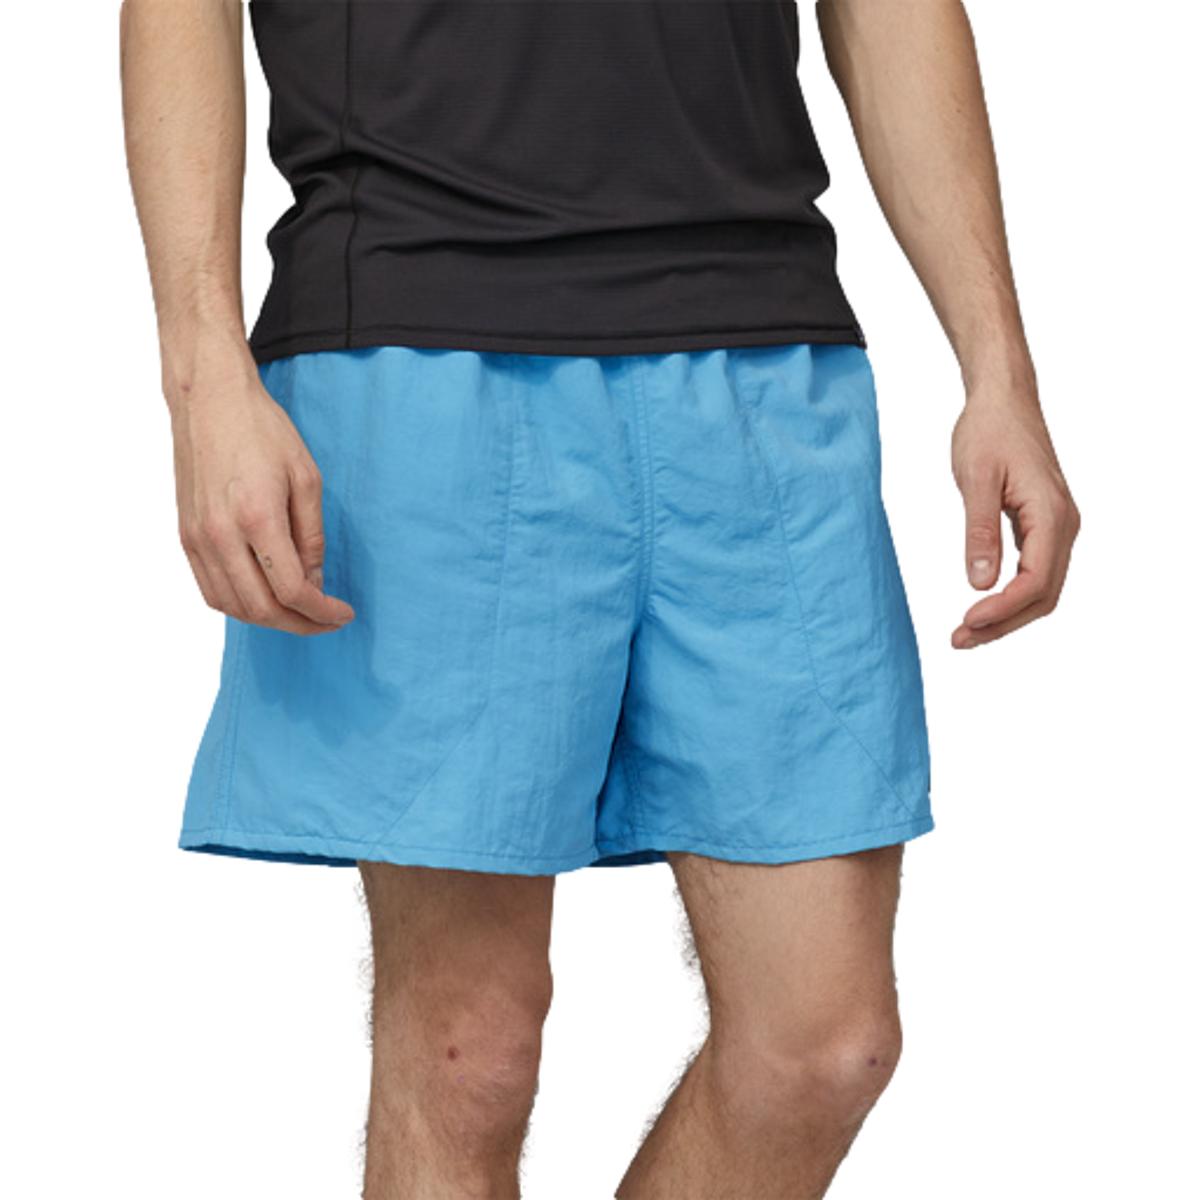 Baggies - 5’ Inseam in Lago Blue - Shorts